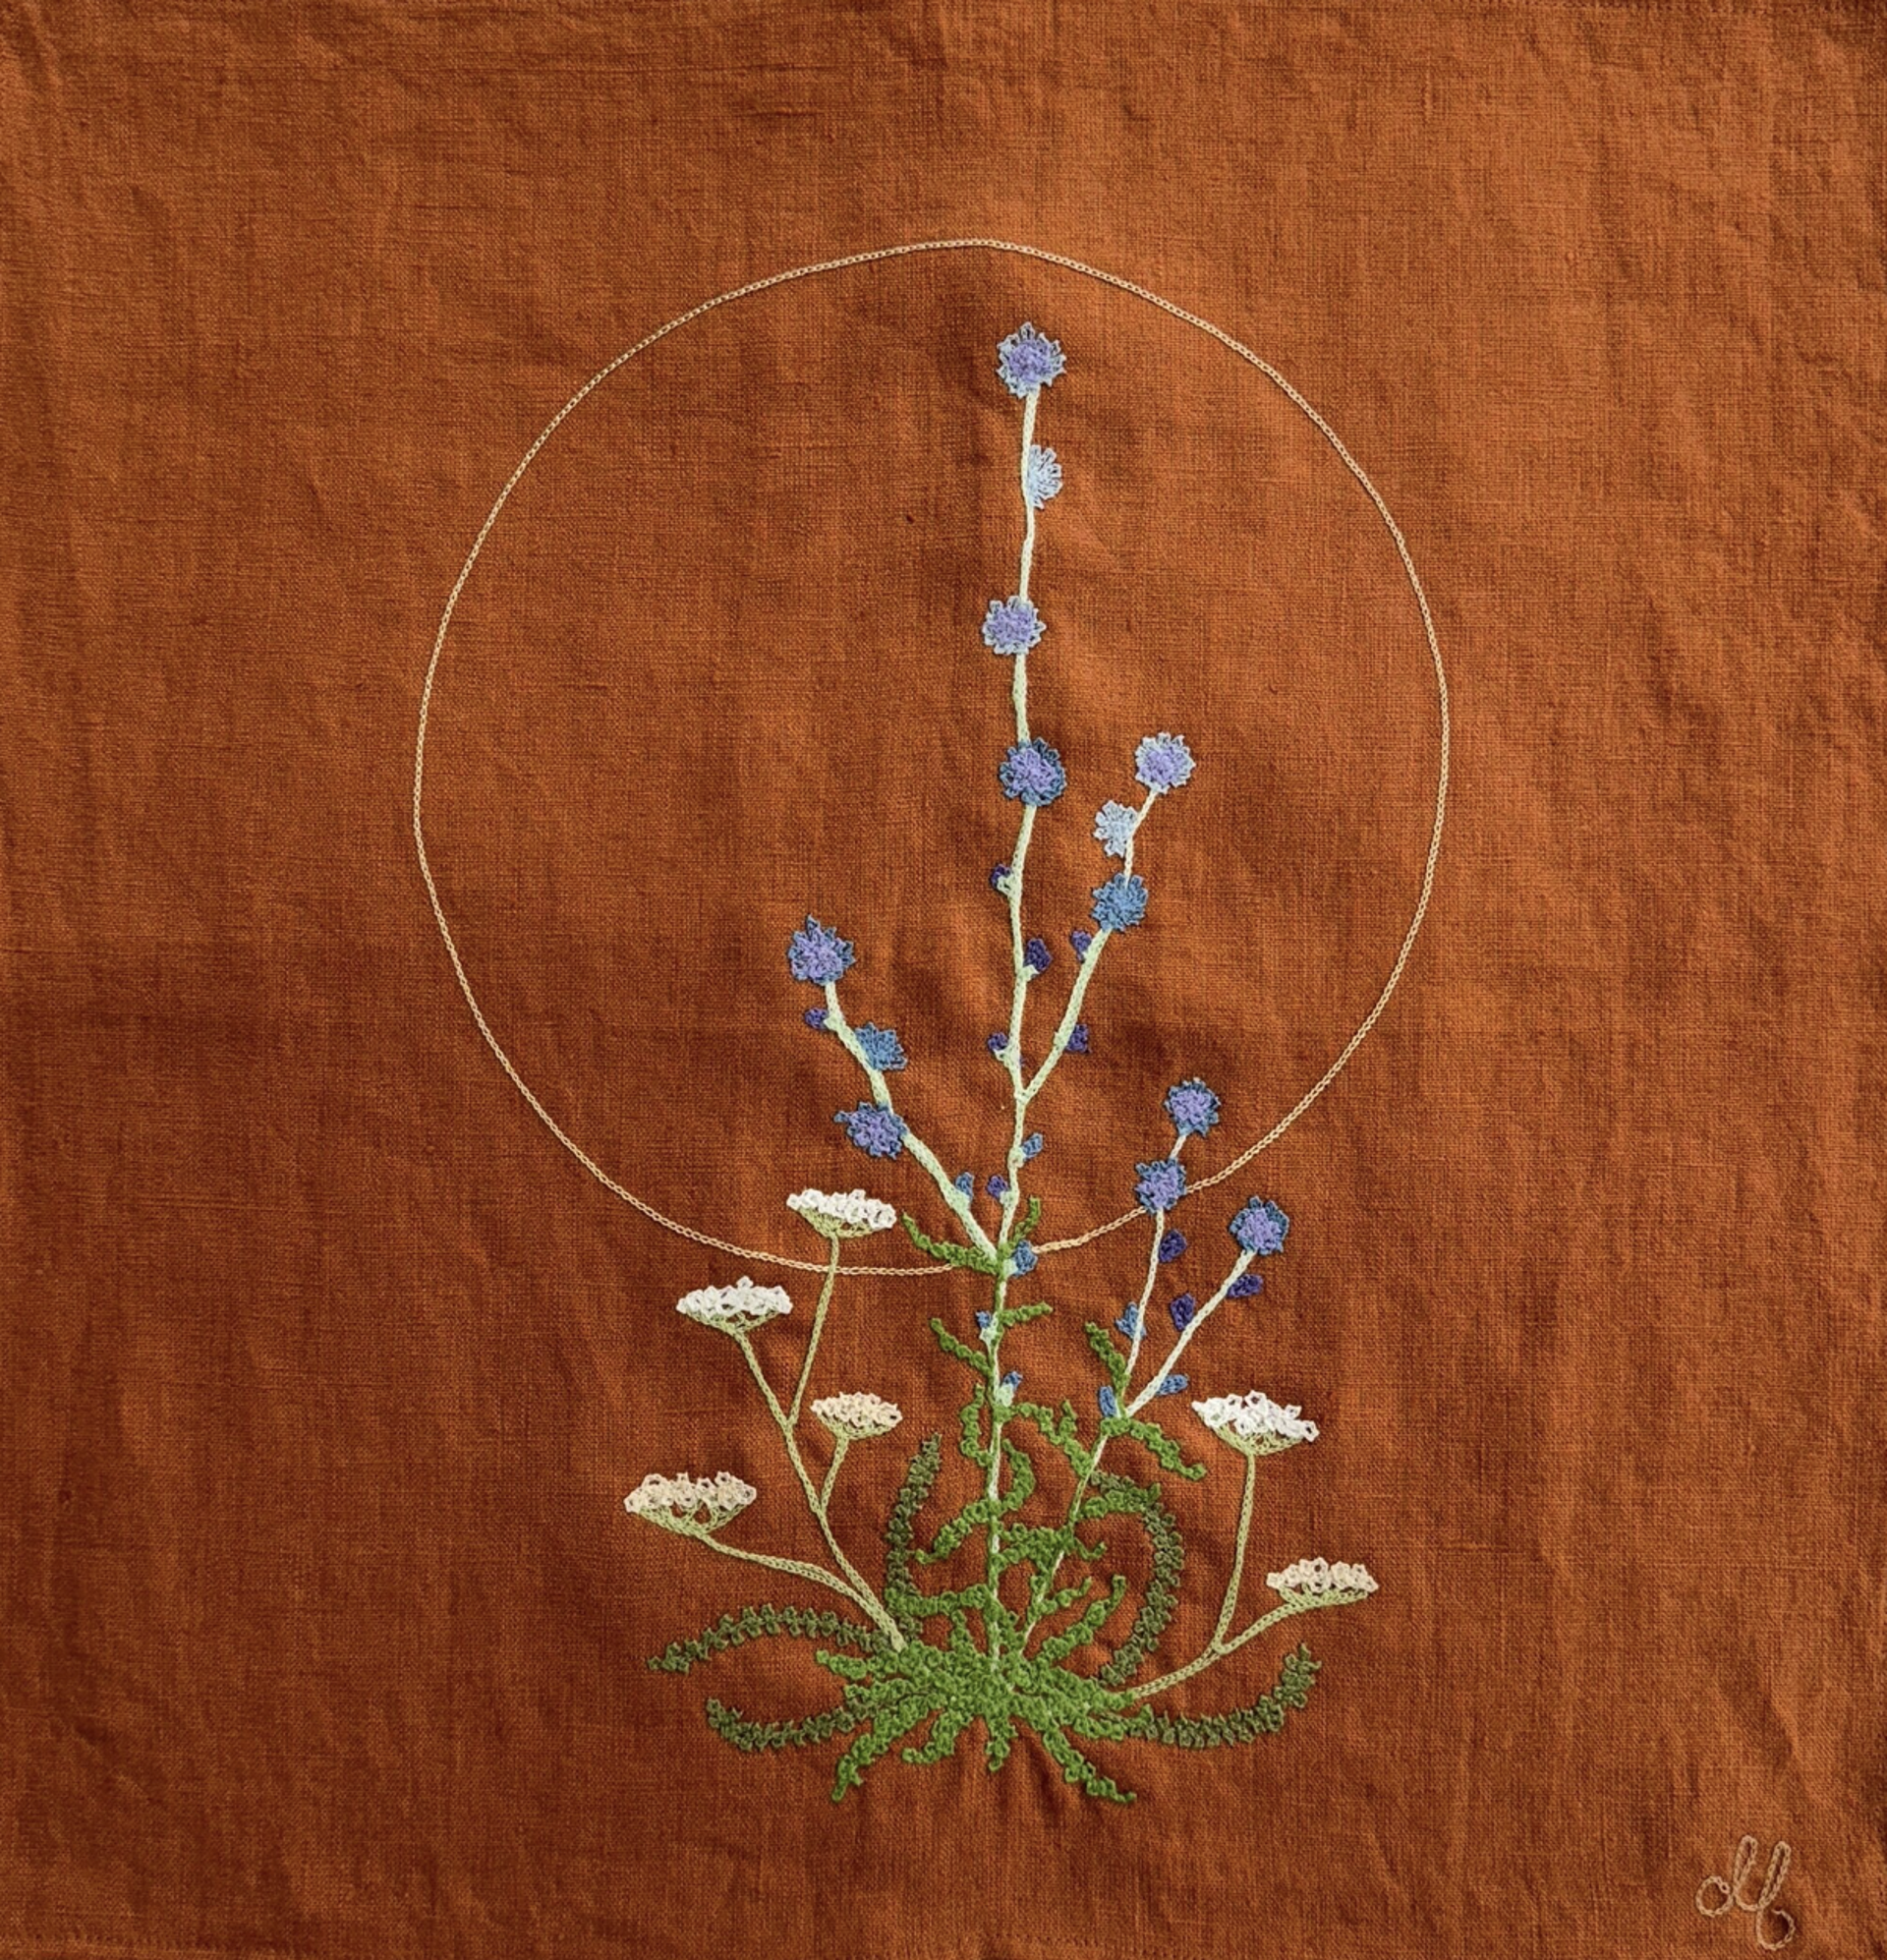 Chicory and Yarrow by Dana Falconberry